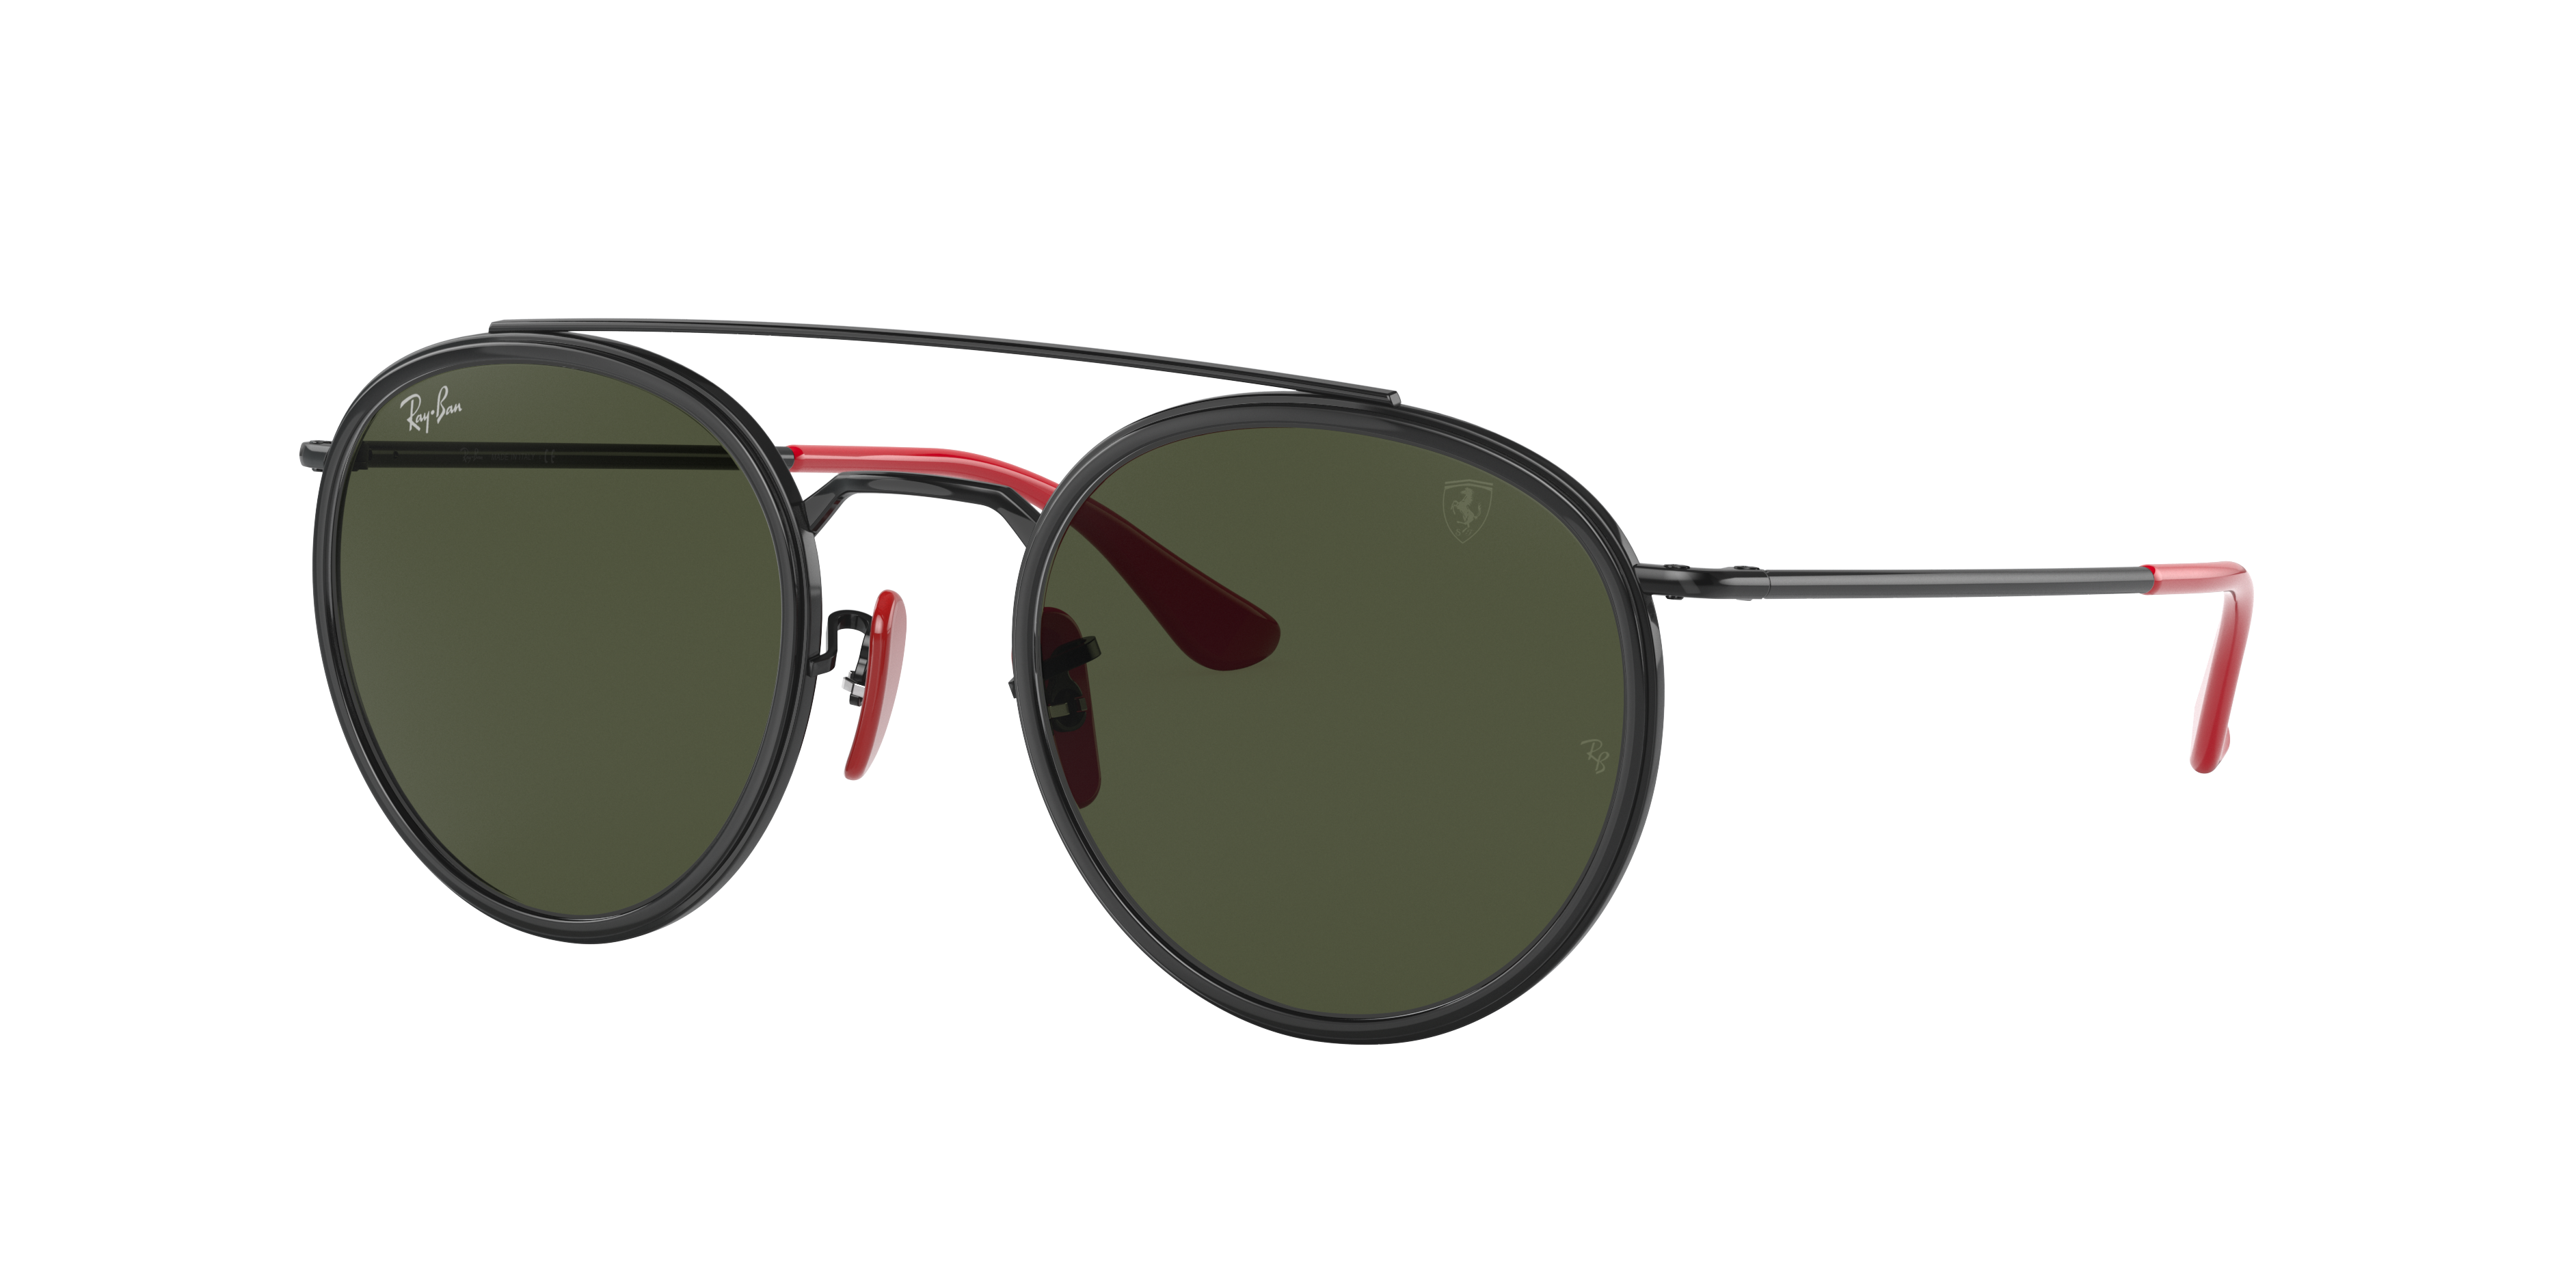 Rb3647m Scuderia Ferrari Collection Sunglasses in Black and Green | Ray-Ban®